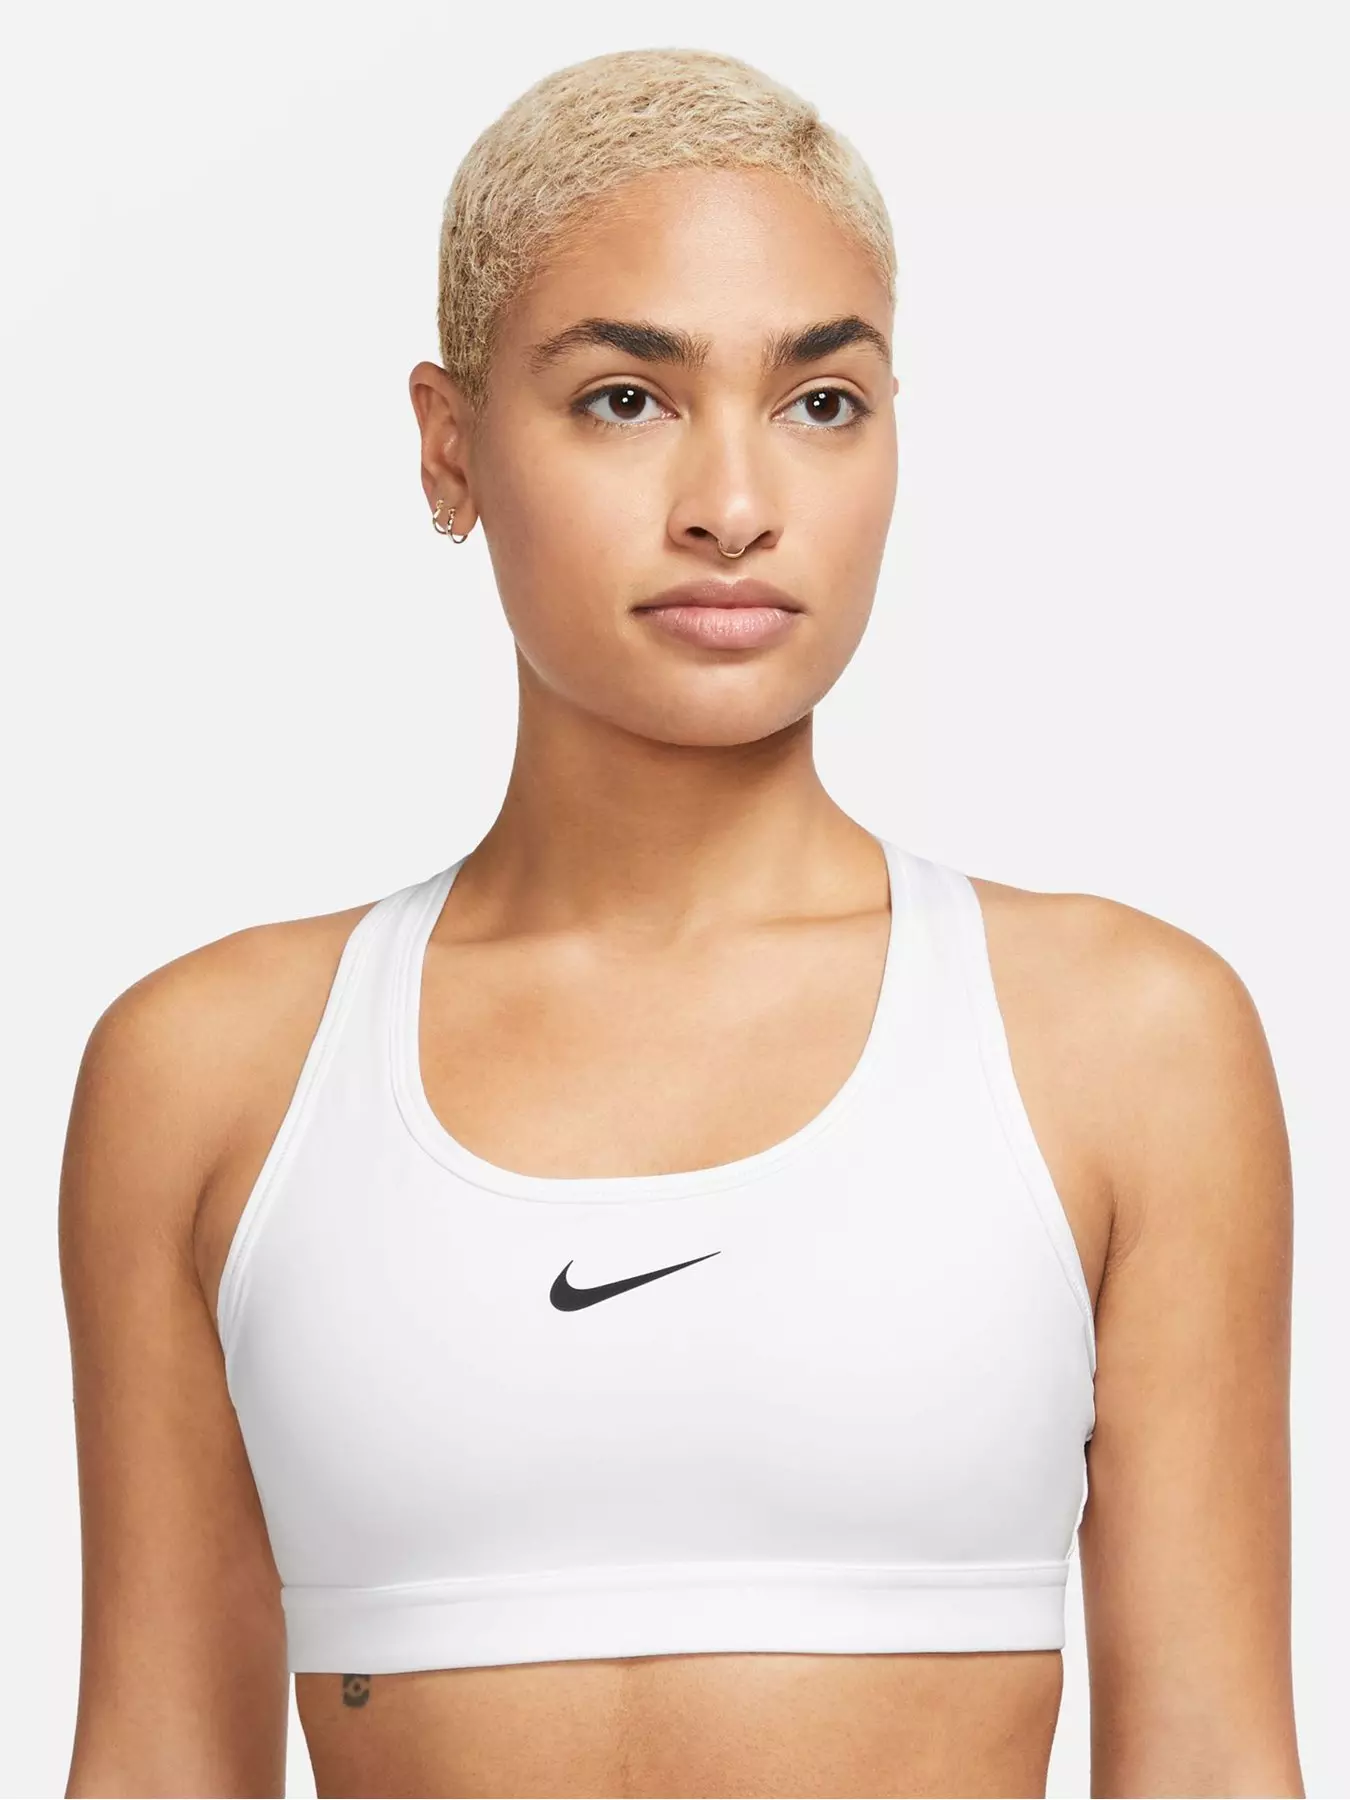 Nike Motion Adapt mesh-trimmed Dri-FIT stretch sports bra ($65